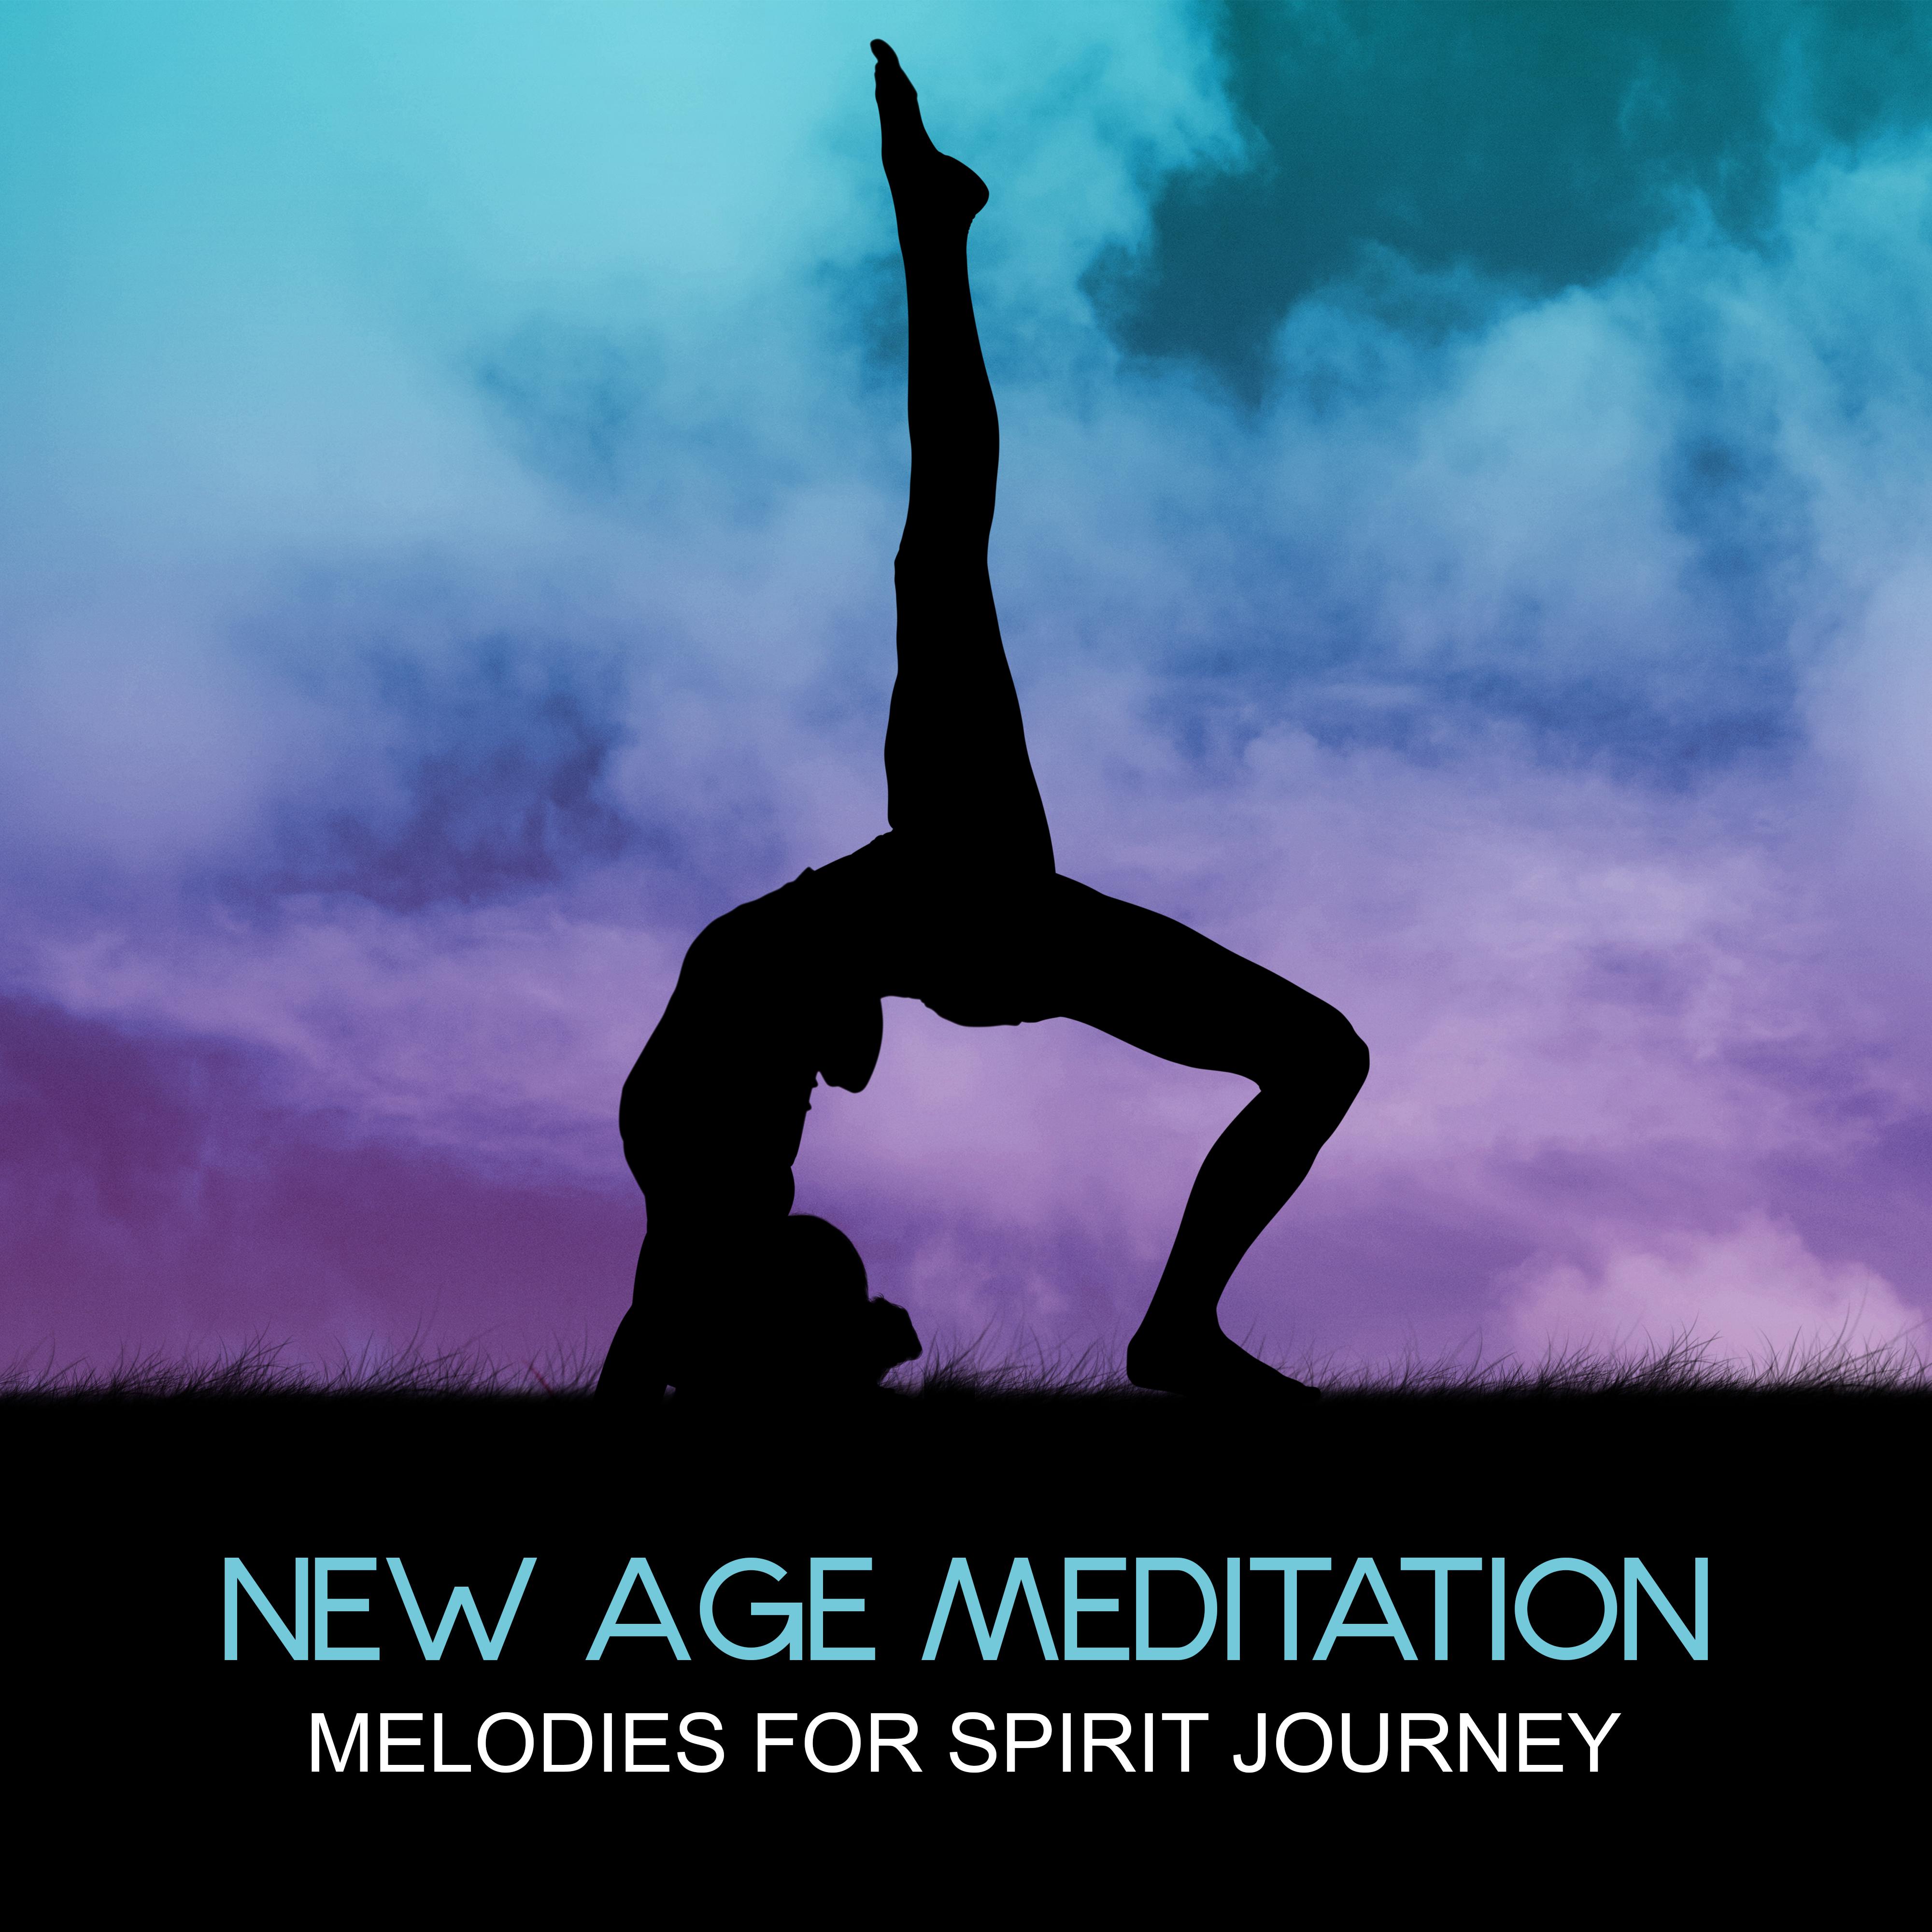 New Age Meditation Melodies for Spirit Journey